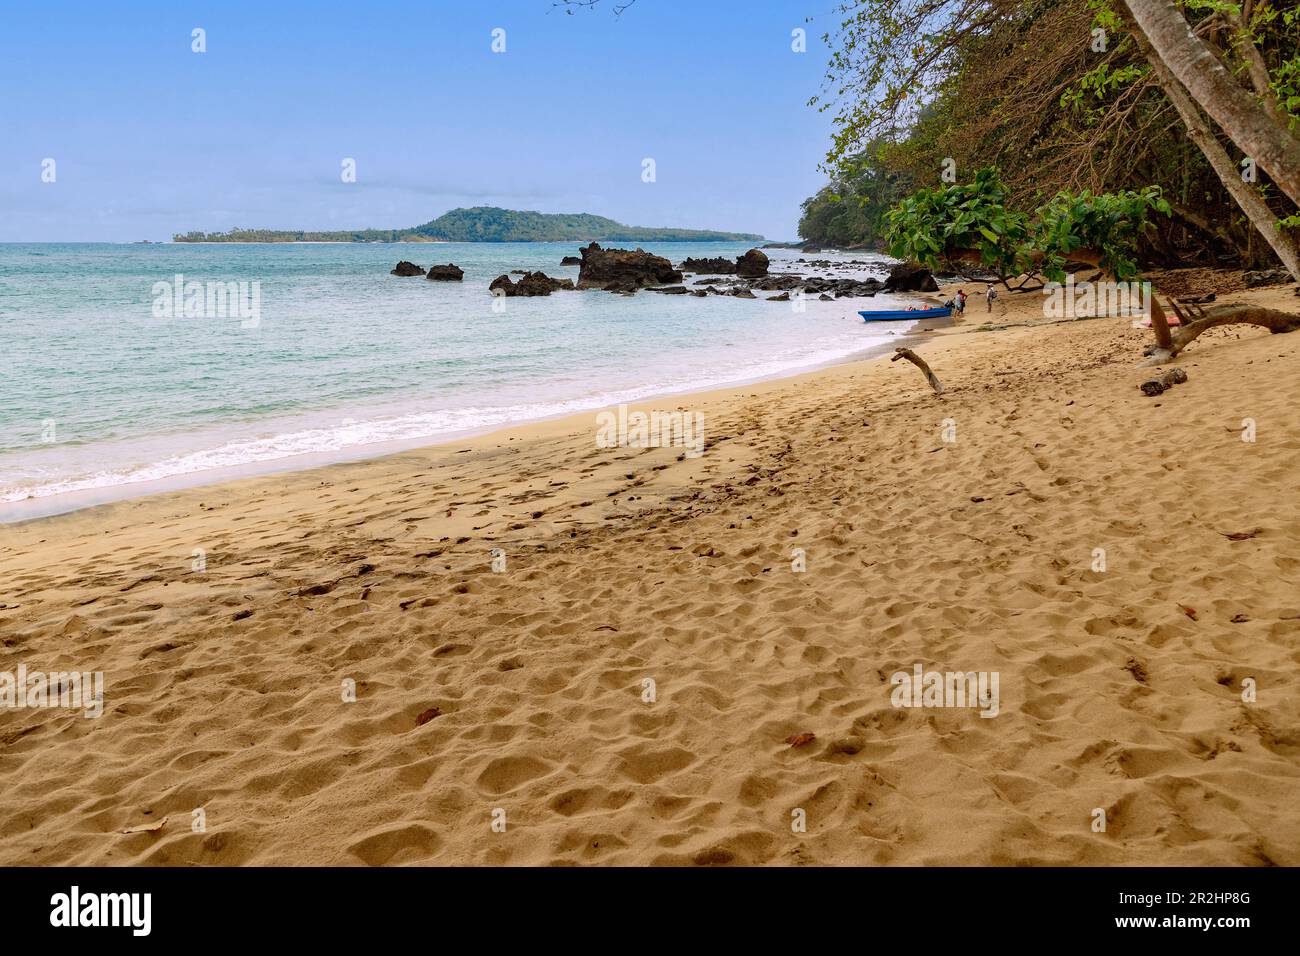 Praia Inhame con vistas a la isla de Ilhéu das Rolas en la isla de São Santo Tomé en África Occidental Foto de stock